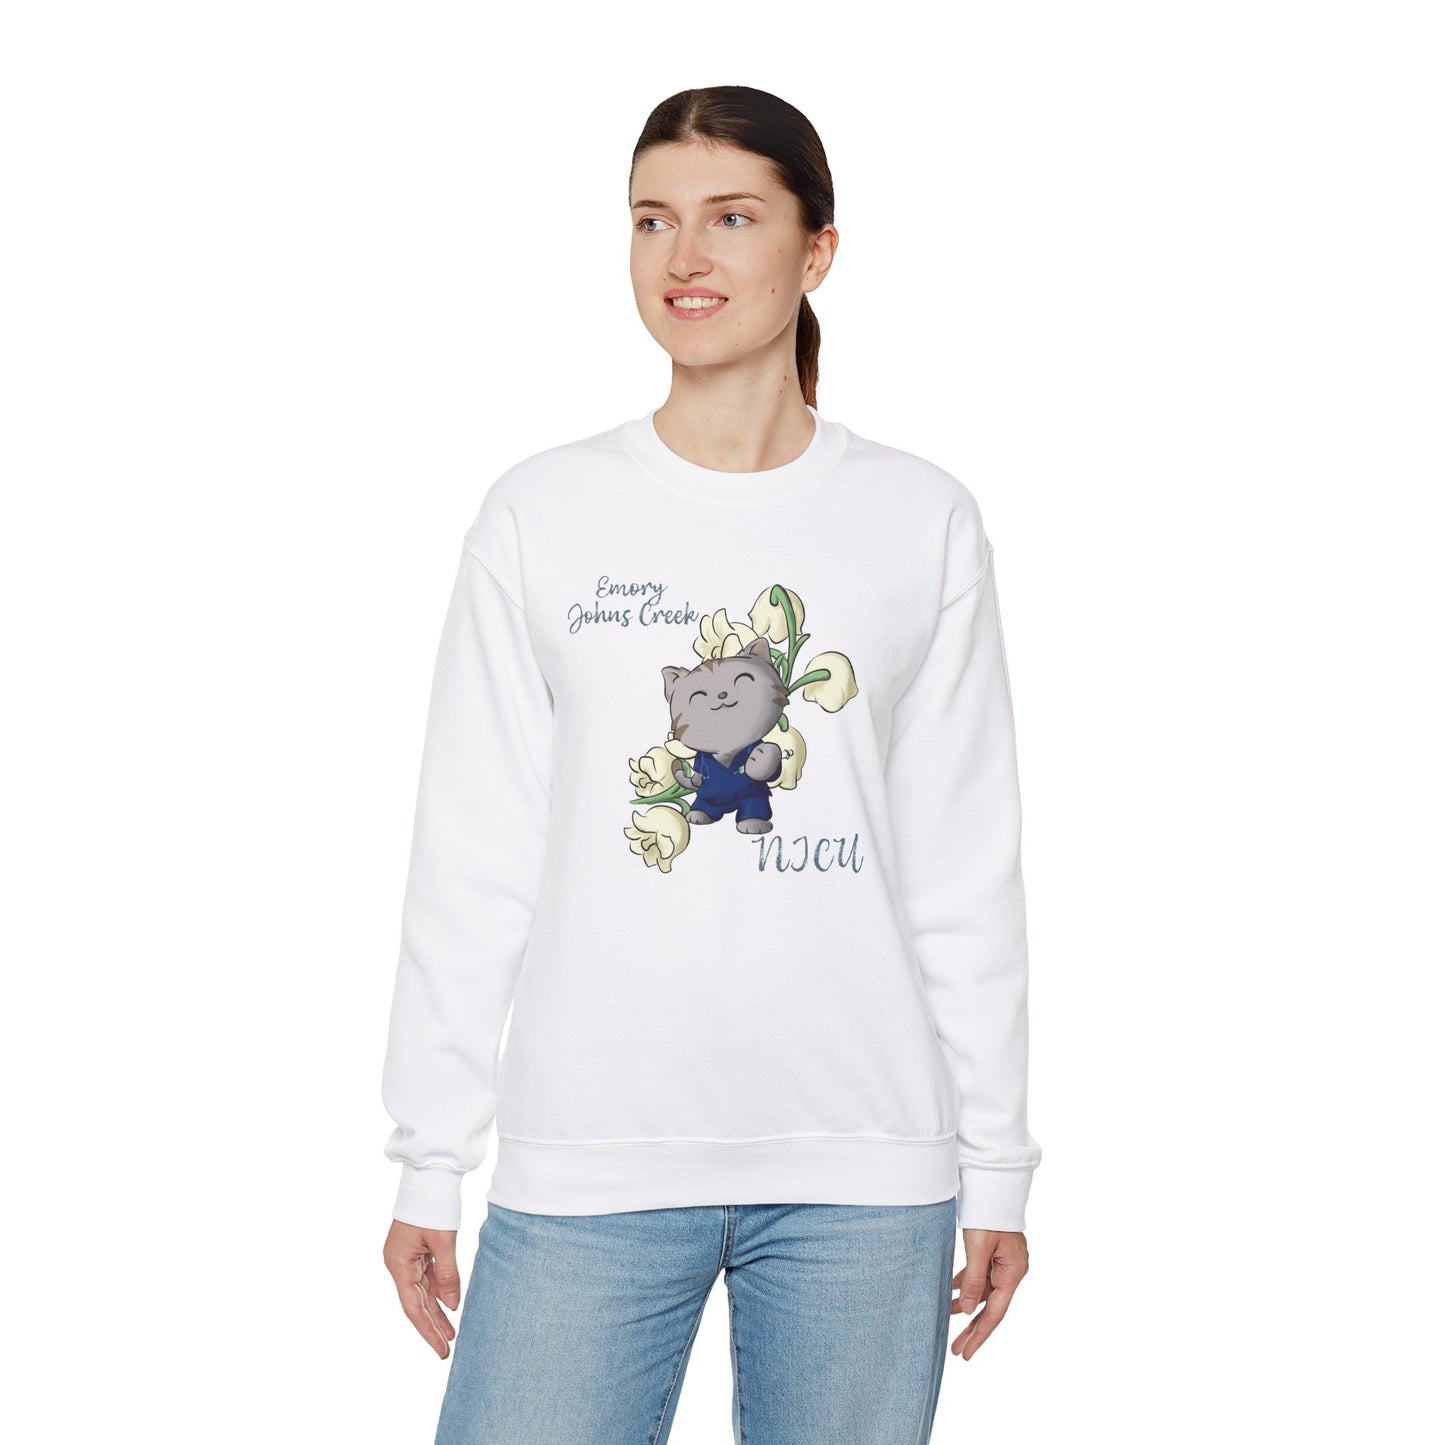 Emory Nurse Kitty Crewneck sweatshirt